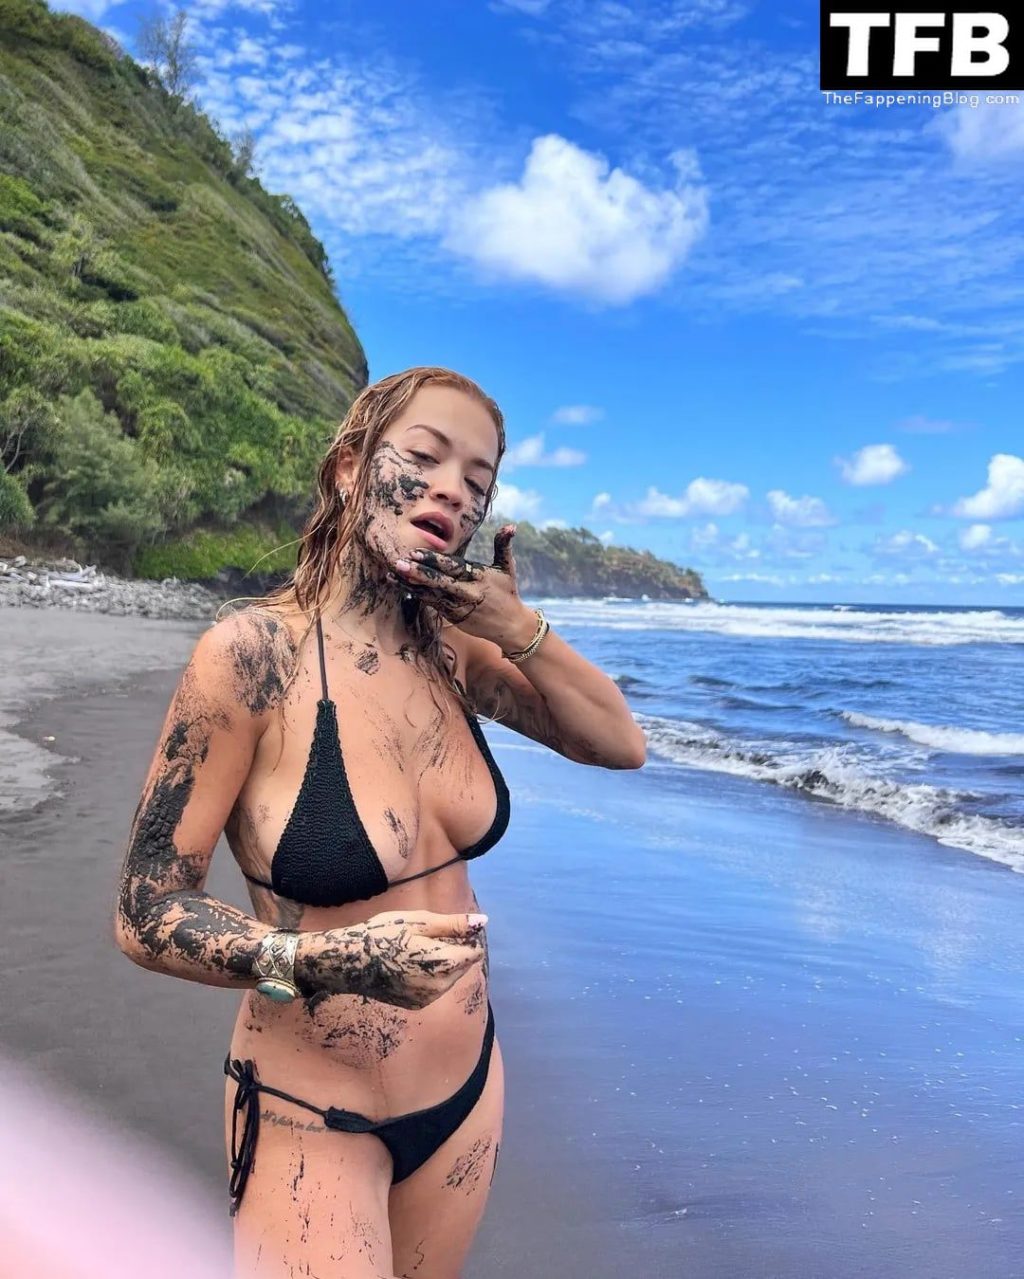 Rita Ora Looks Hot in a Bikini on the Beach (6 Photos)